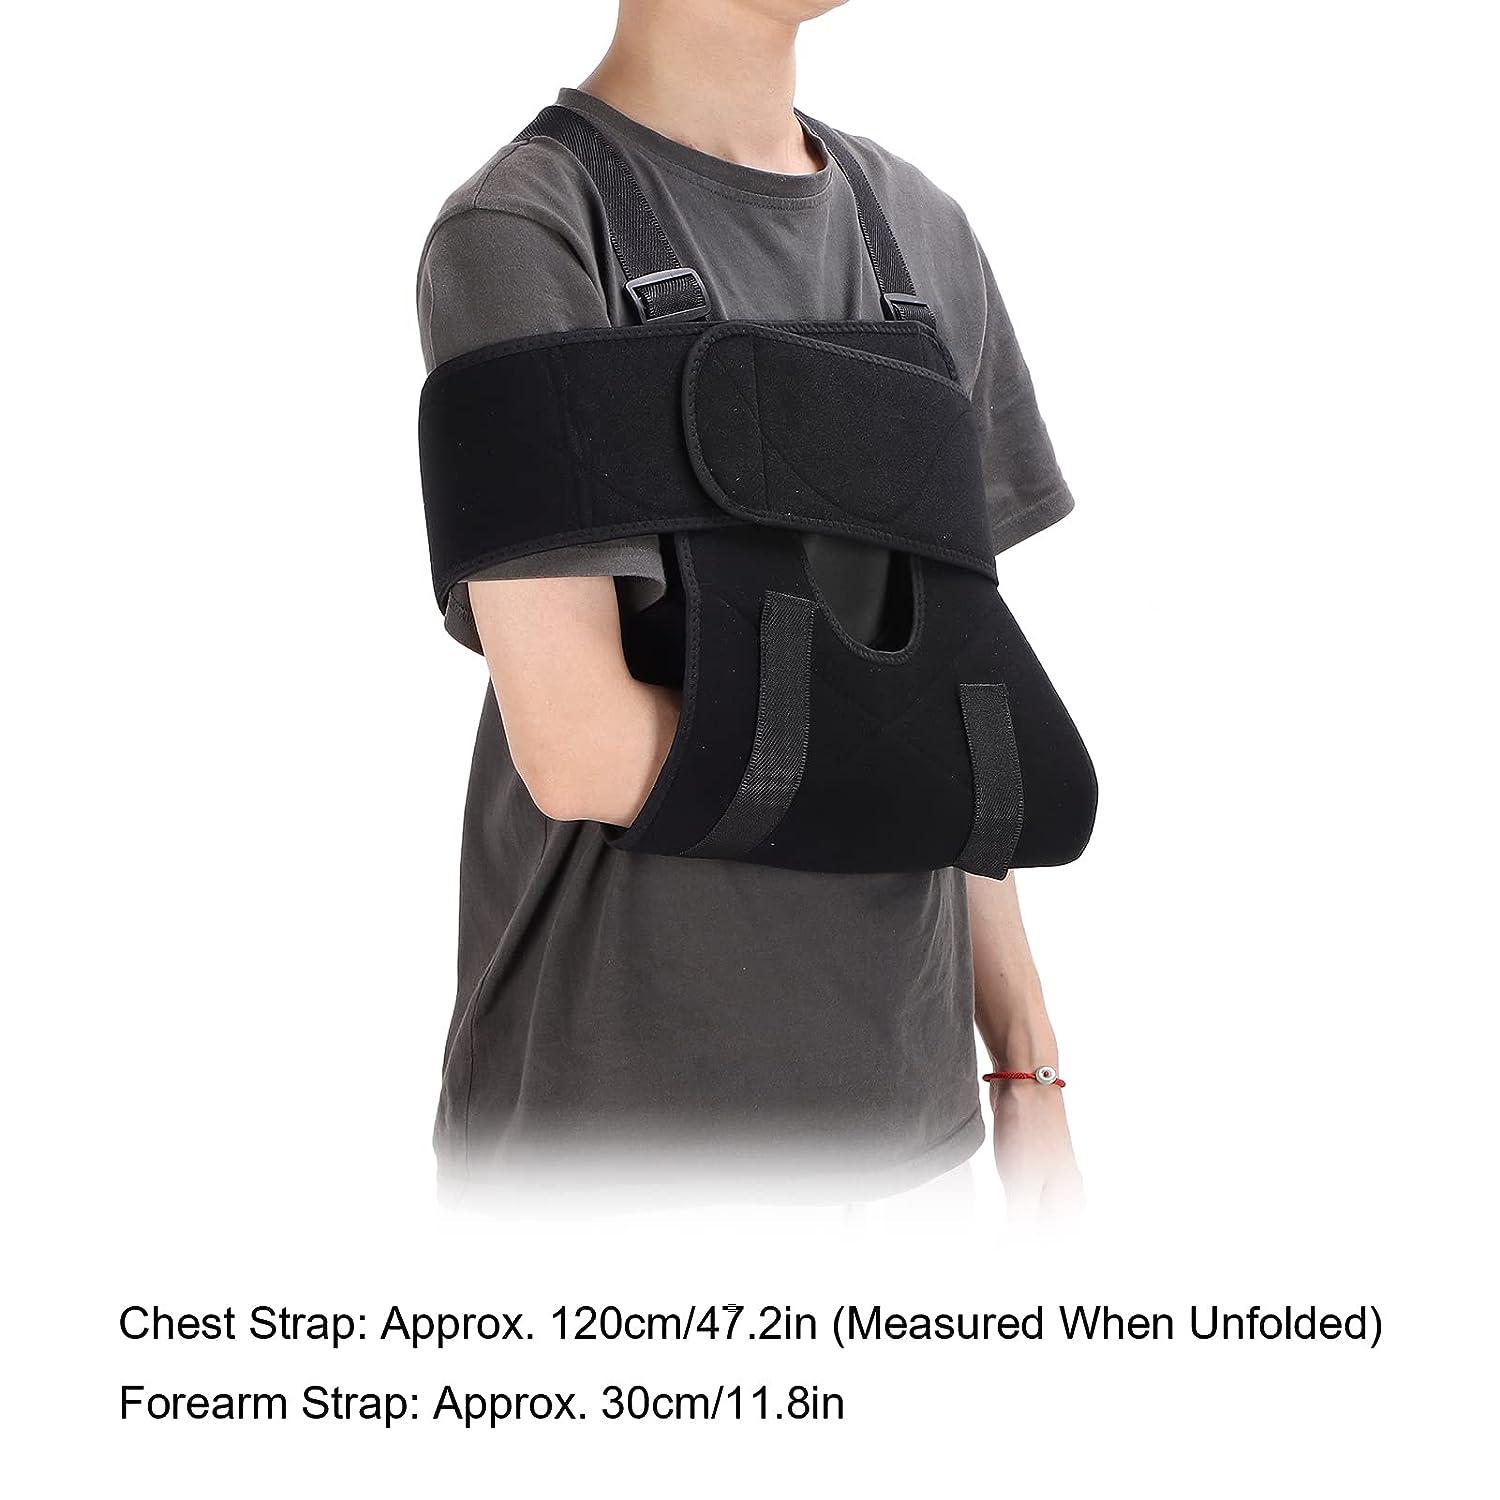 Arm Sling Shoulder Immobilizer, Rotator Cuff Support Brace